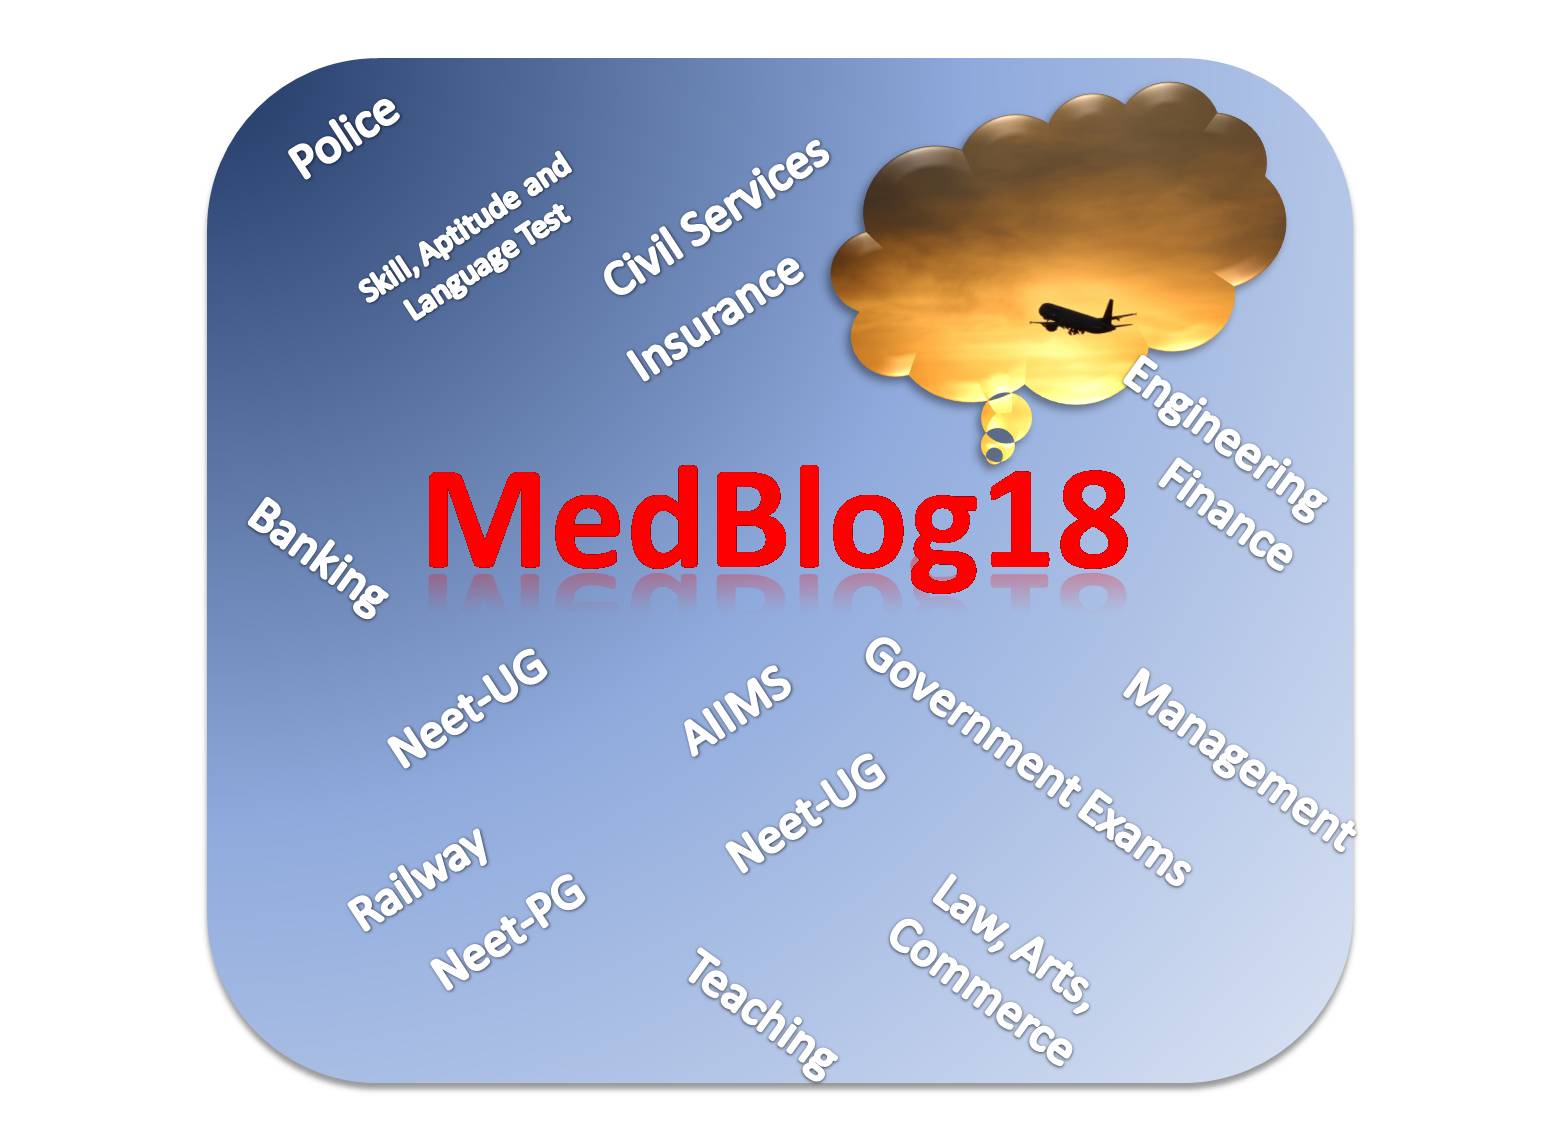 MedBlog18 single feature